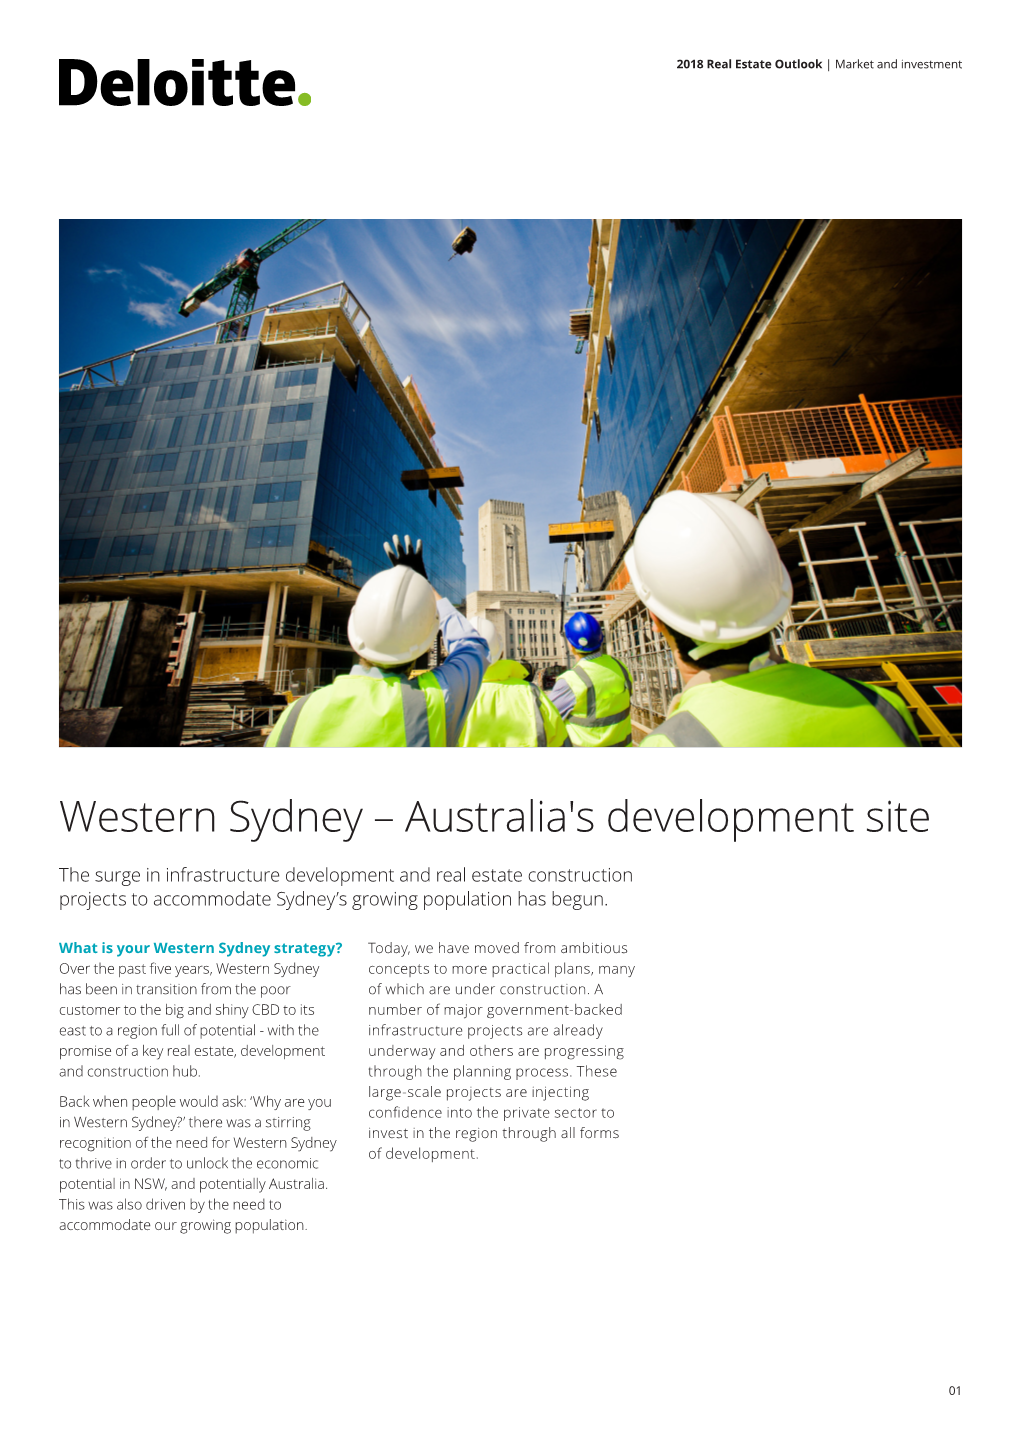 Western Sydney – Australia's Development Site